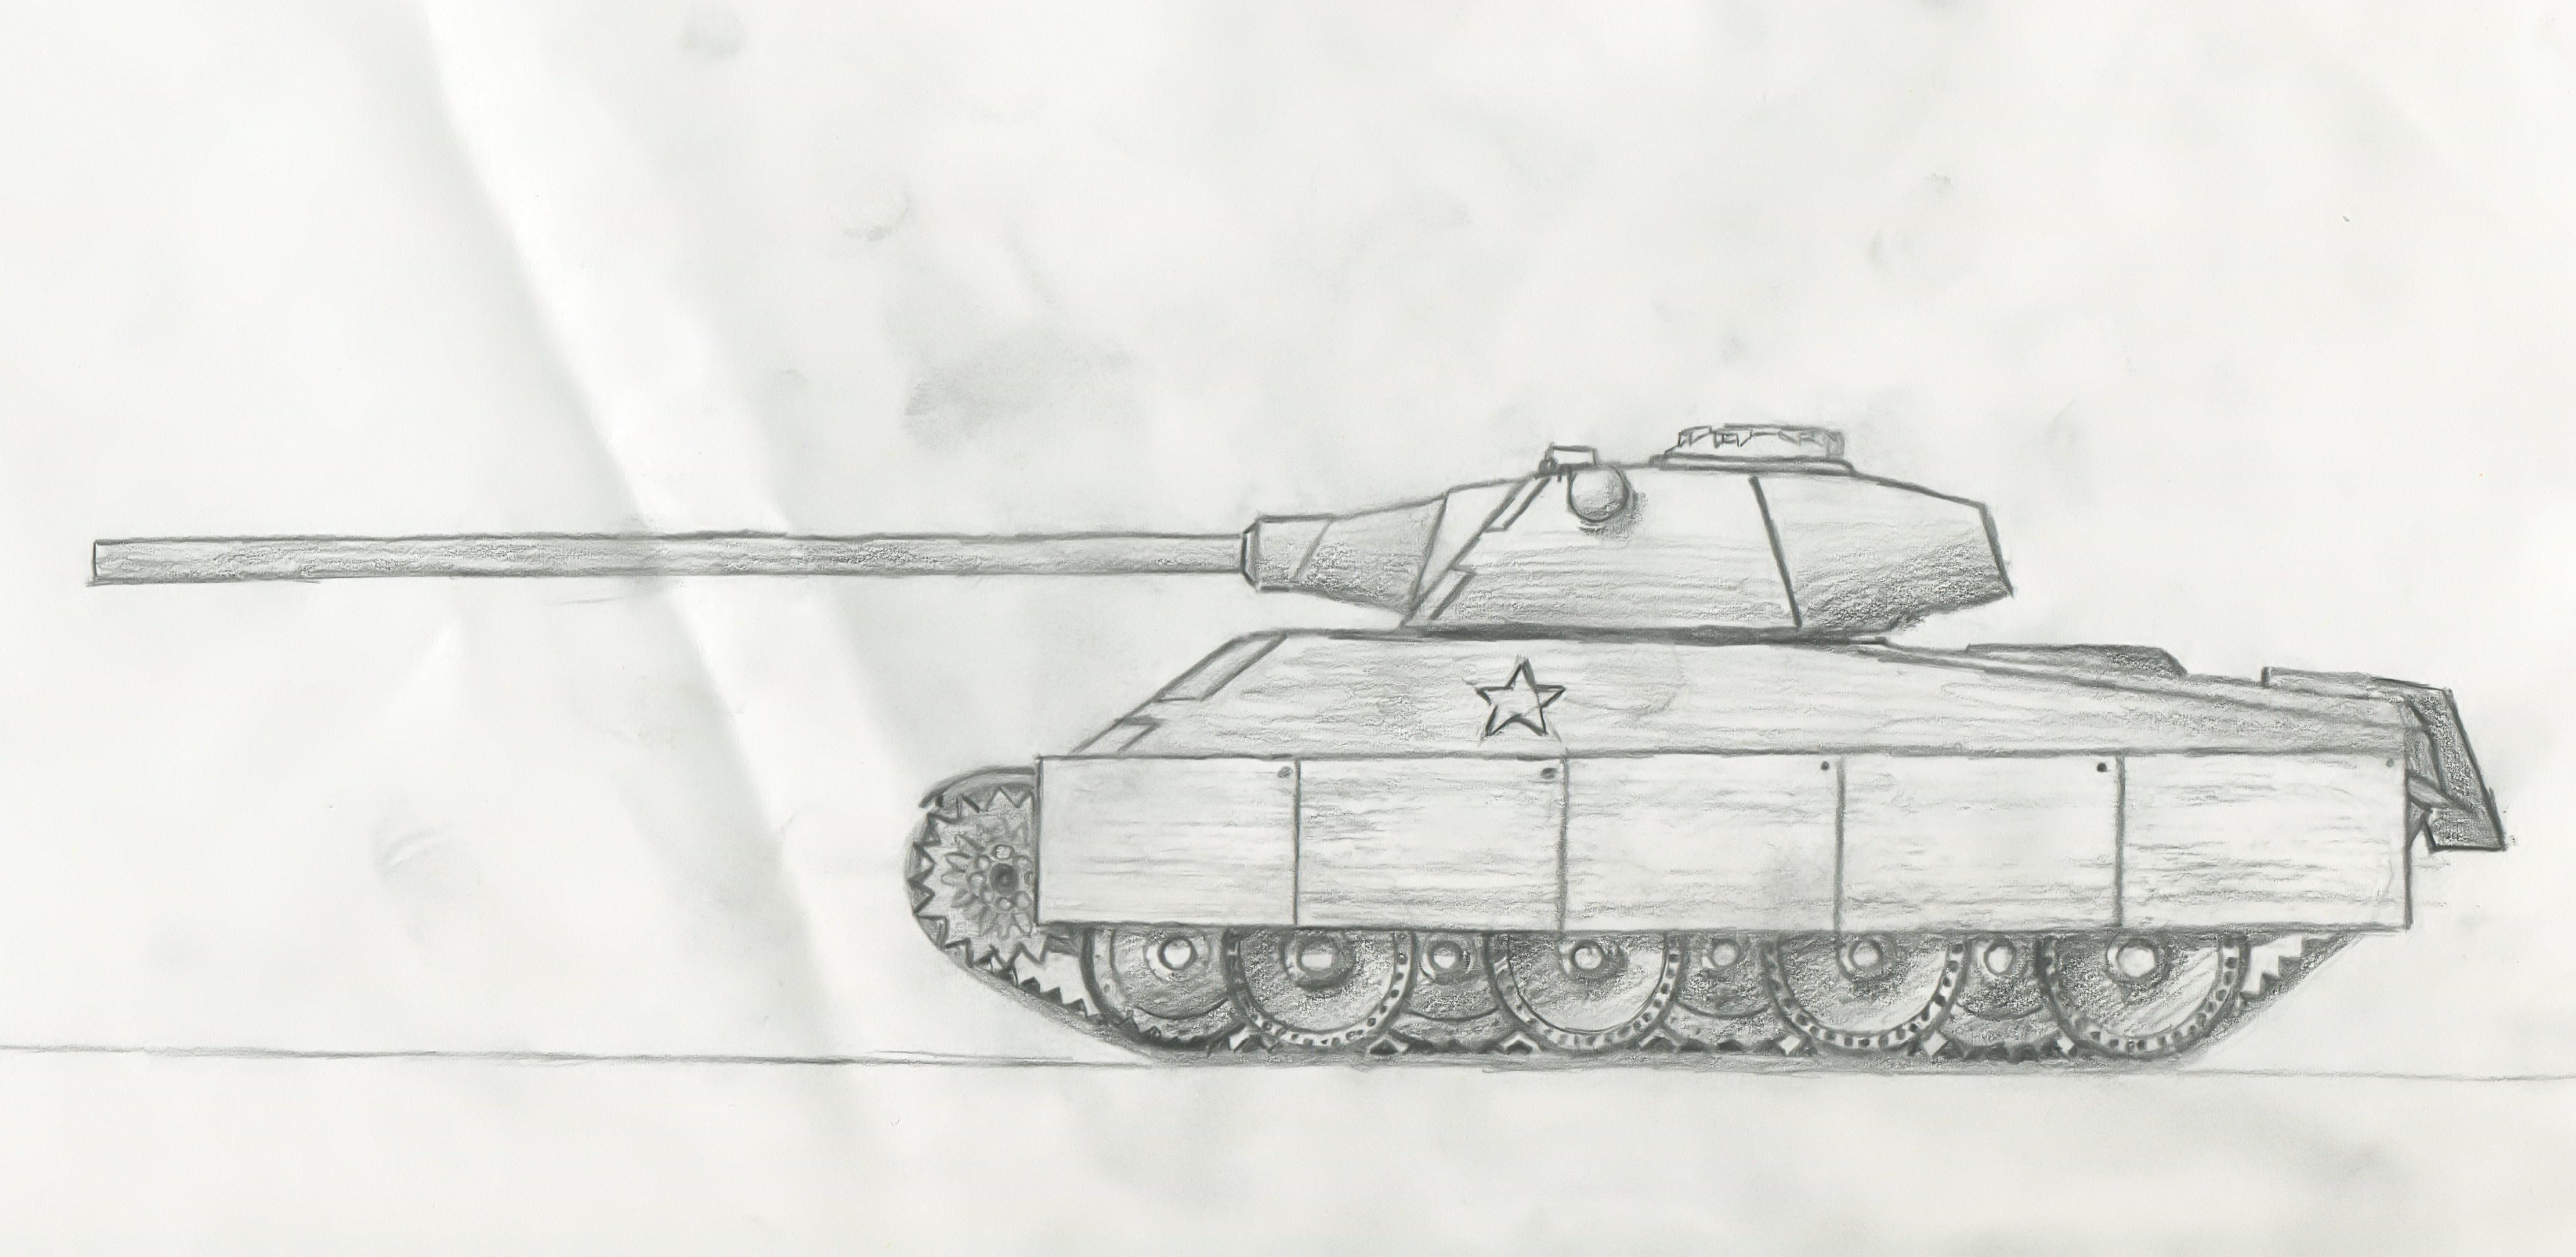 Легкая картинка танка. Танк т-34 рисунок карандашом. Танк е100 рисунок карандашом. Танки рисунки карандашом. Рисунок танка карандашом.